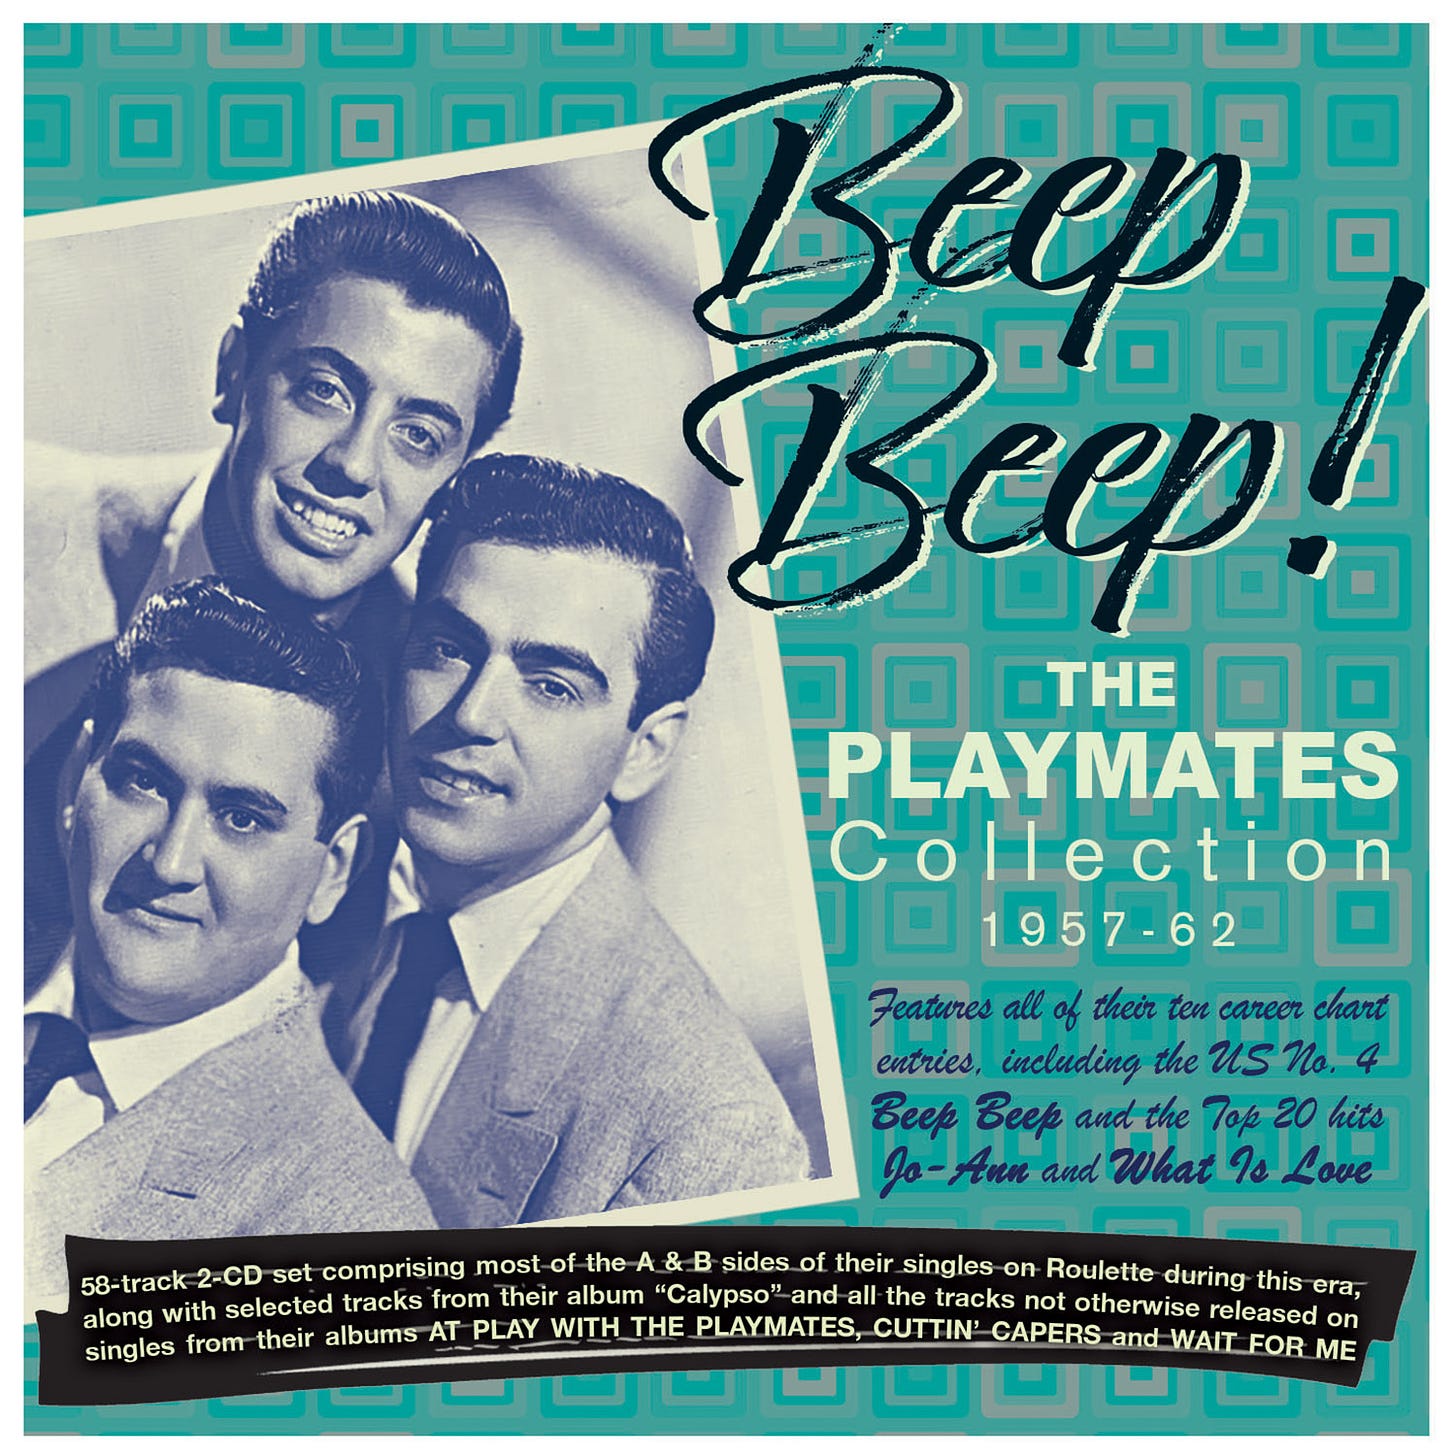 The Playmates - Beep Beep! The Playmates Collection 1957-62 - MVD Entertainment Group B2B